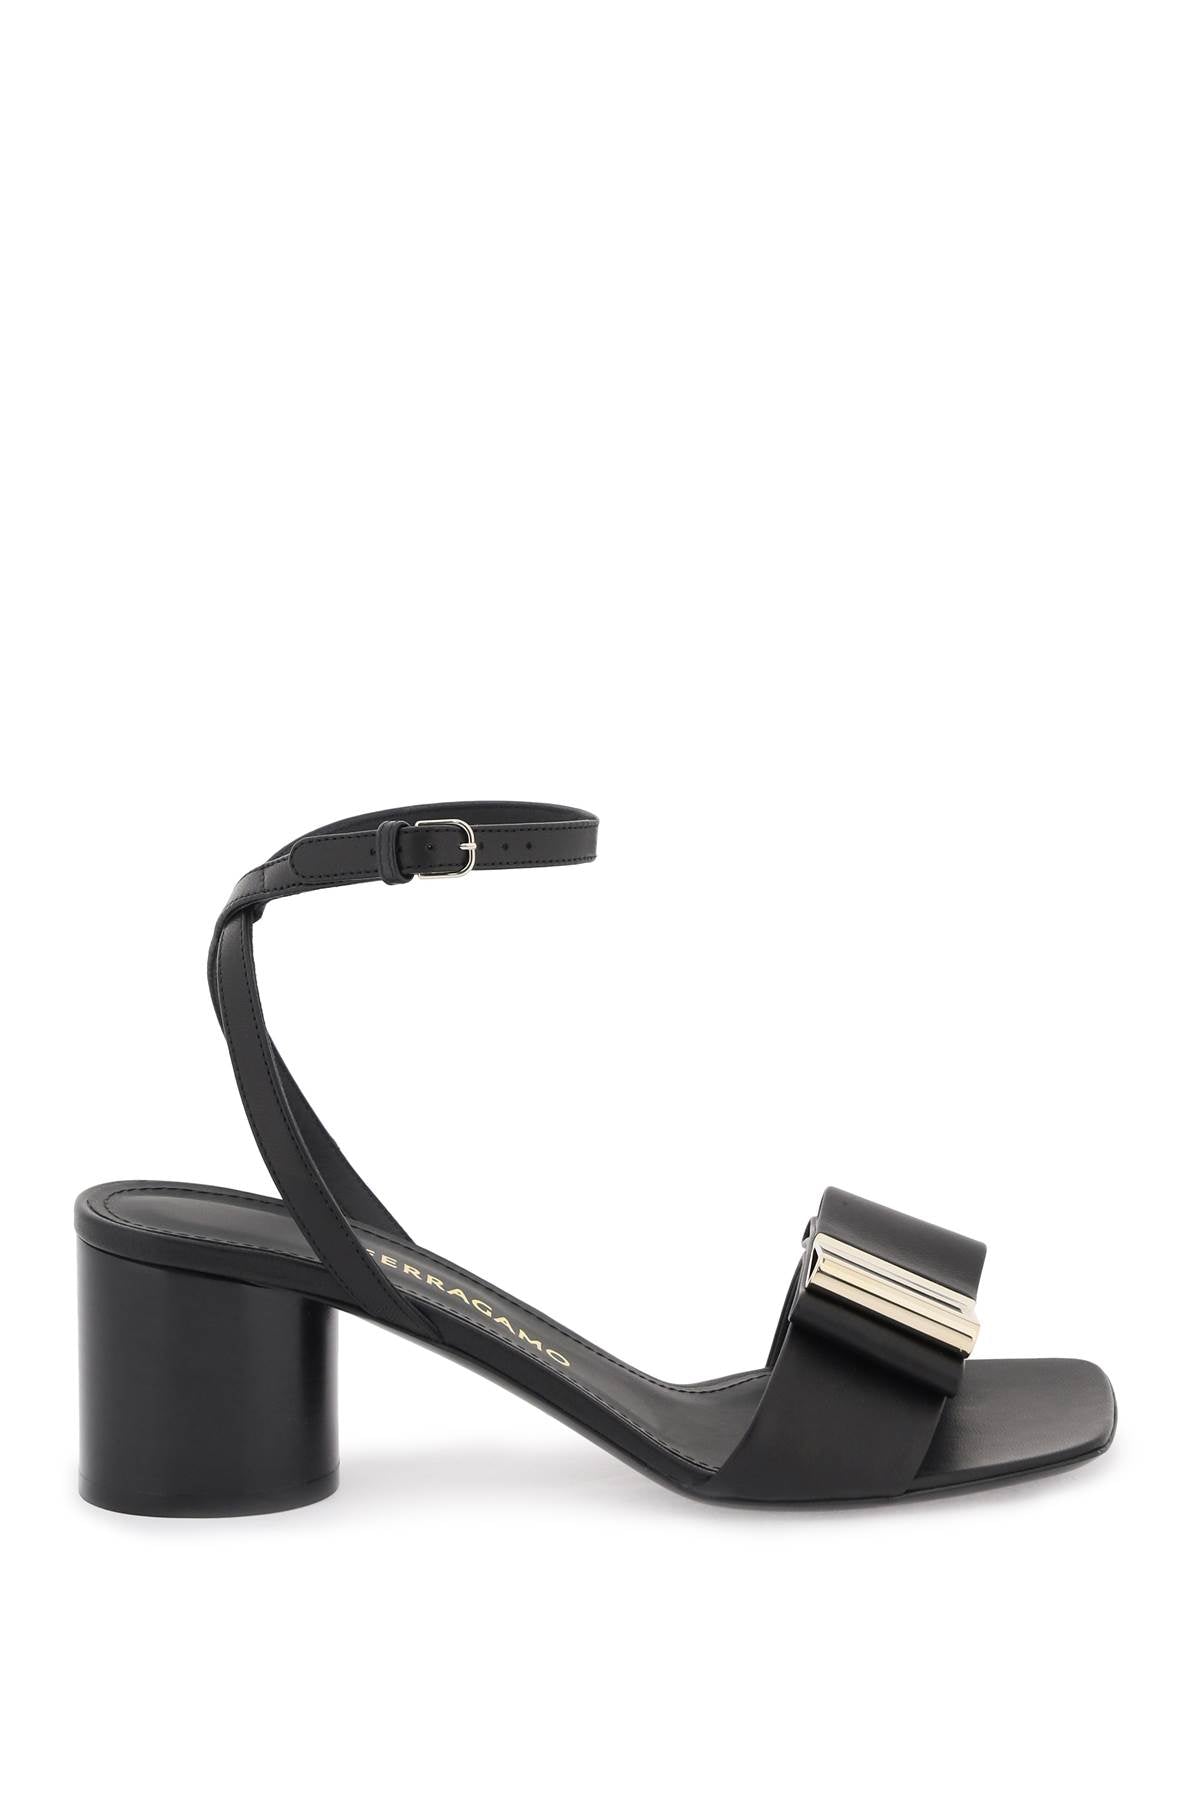 FERRAGAMO Luxurious Black Double Bow Leather Sandals for Women